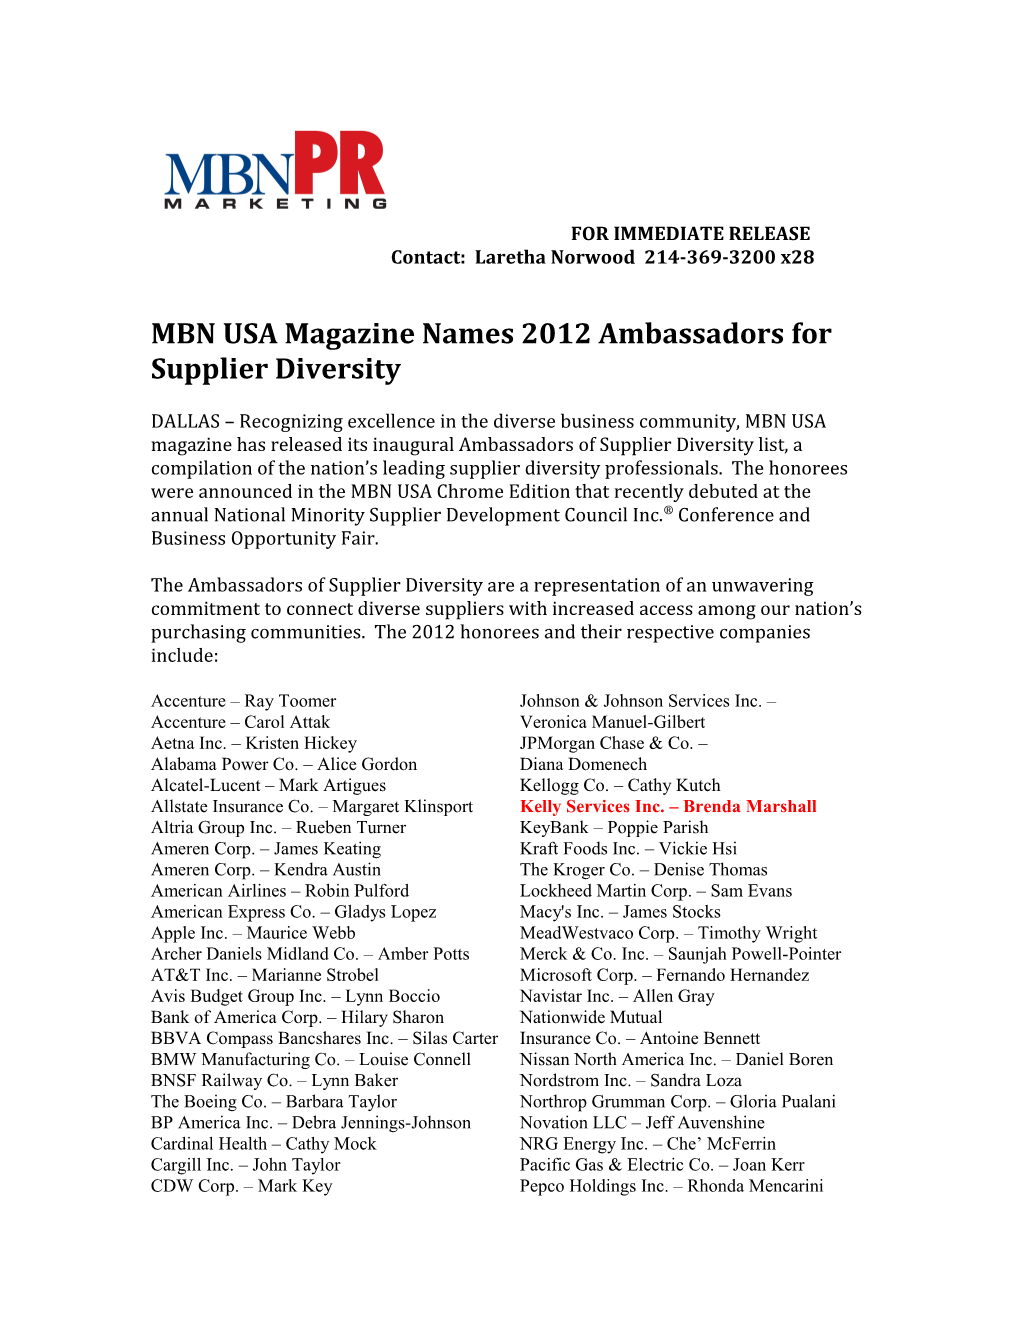 MBN USA Magazine Names 2012 Ambassadors for Supplier Diversity